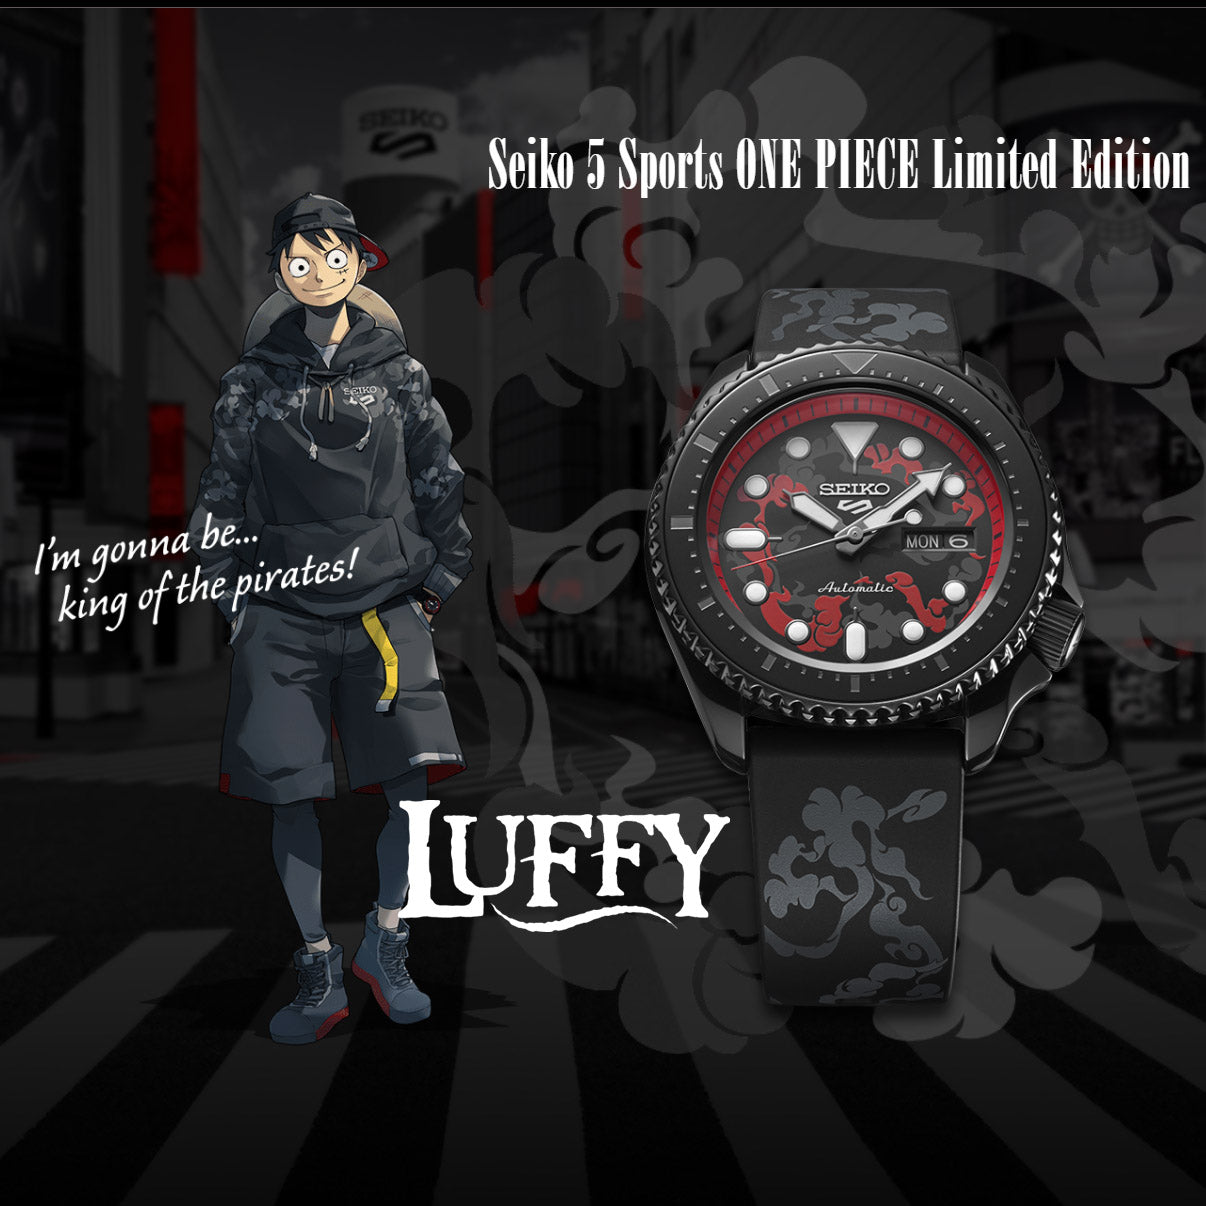 ONE PIECE x Seiko To Drop Limited “Luffy Gear 5” Edition Watch